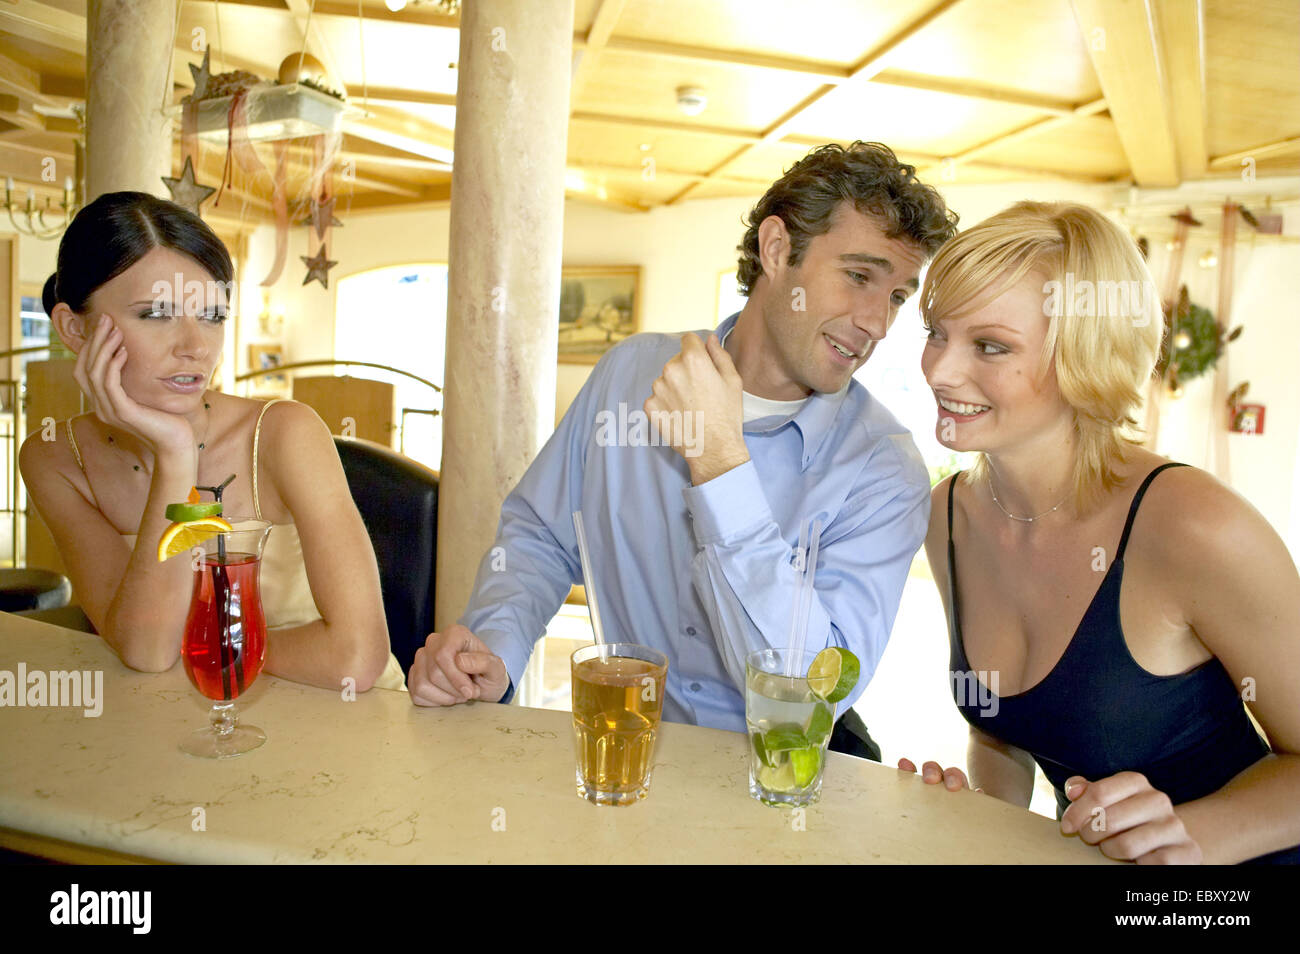 www.alamy.com/stock-photo-man-flirting-with-two-women-at-a-hotel-bar-jealou...